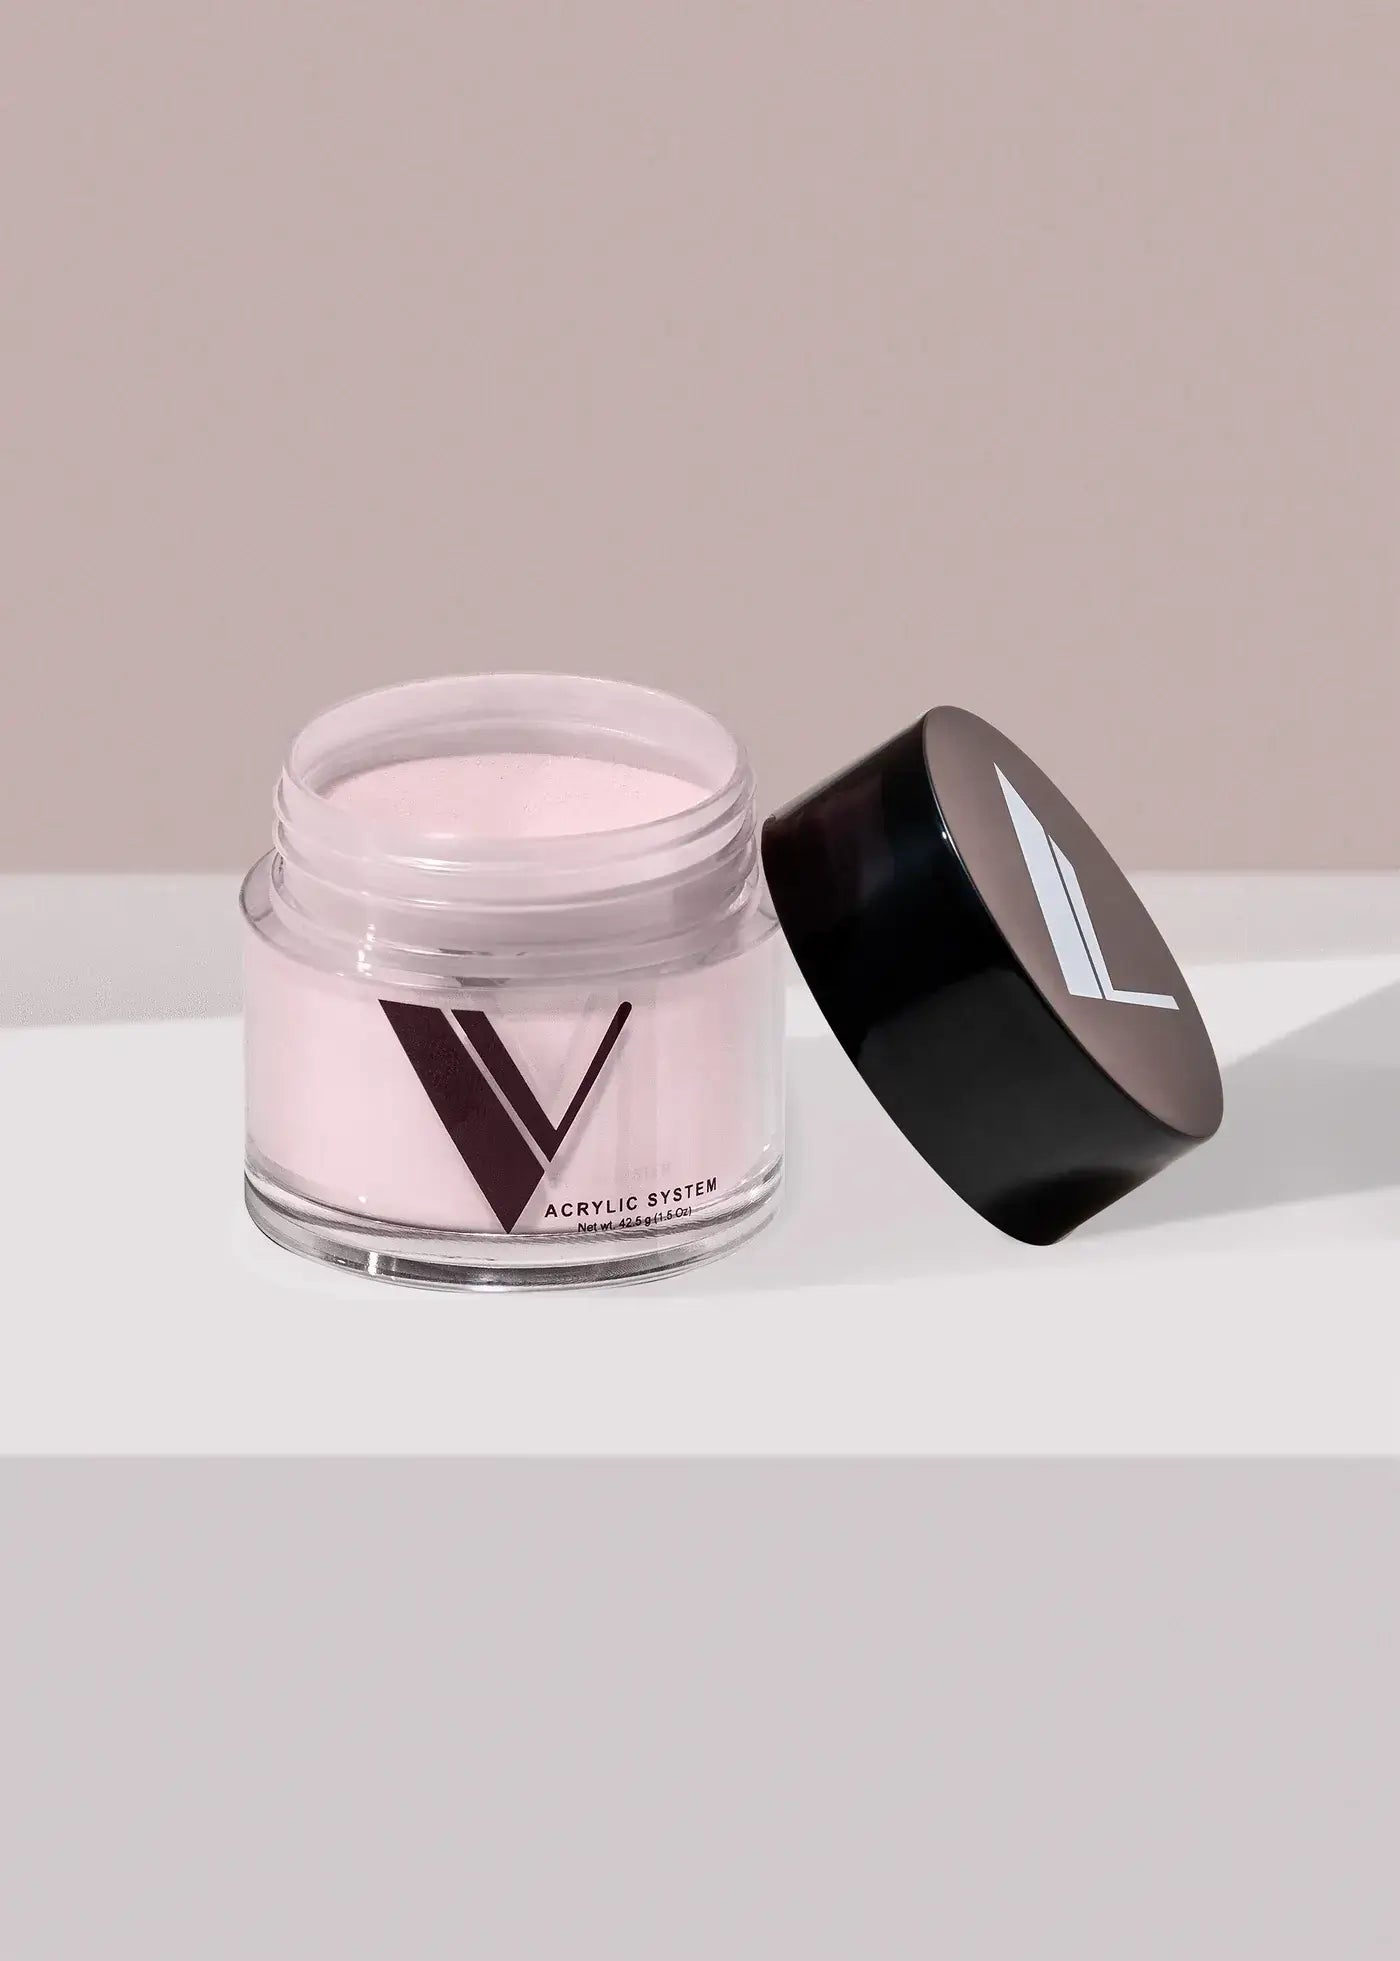 Valentino Acrylic Powder - Blushing 1.5oz - Premier Nail Supply 